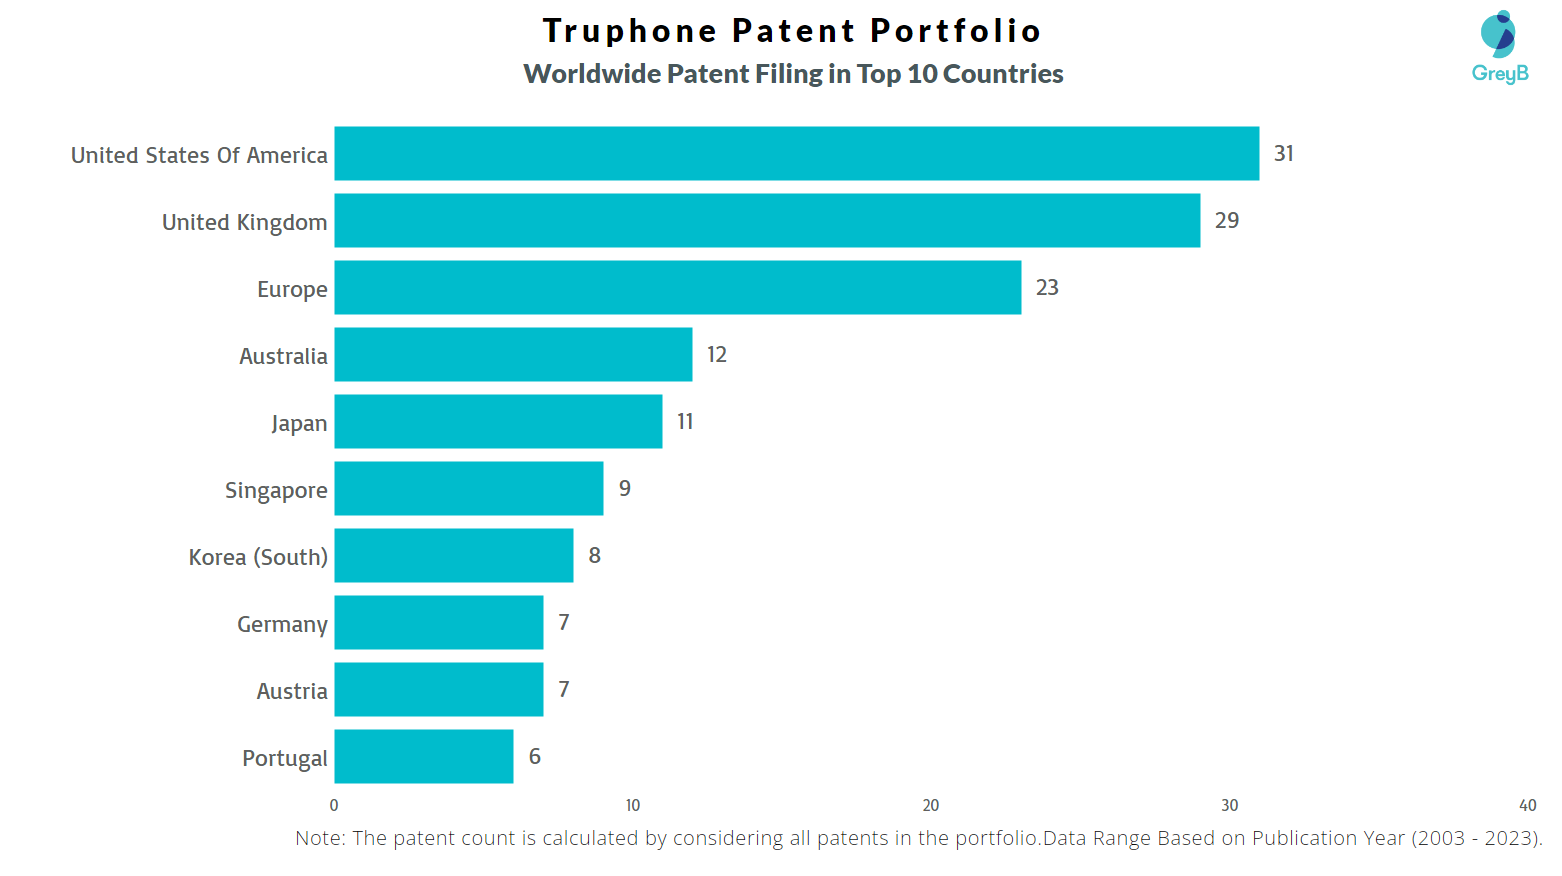 Truphone Worldwide Patent Filing
